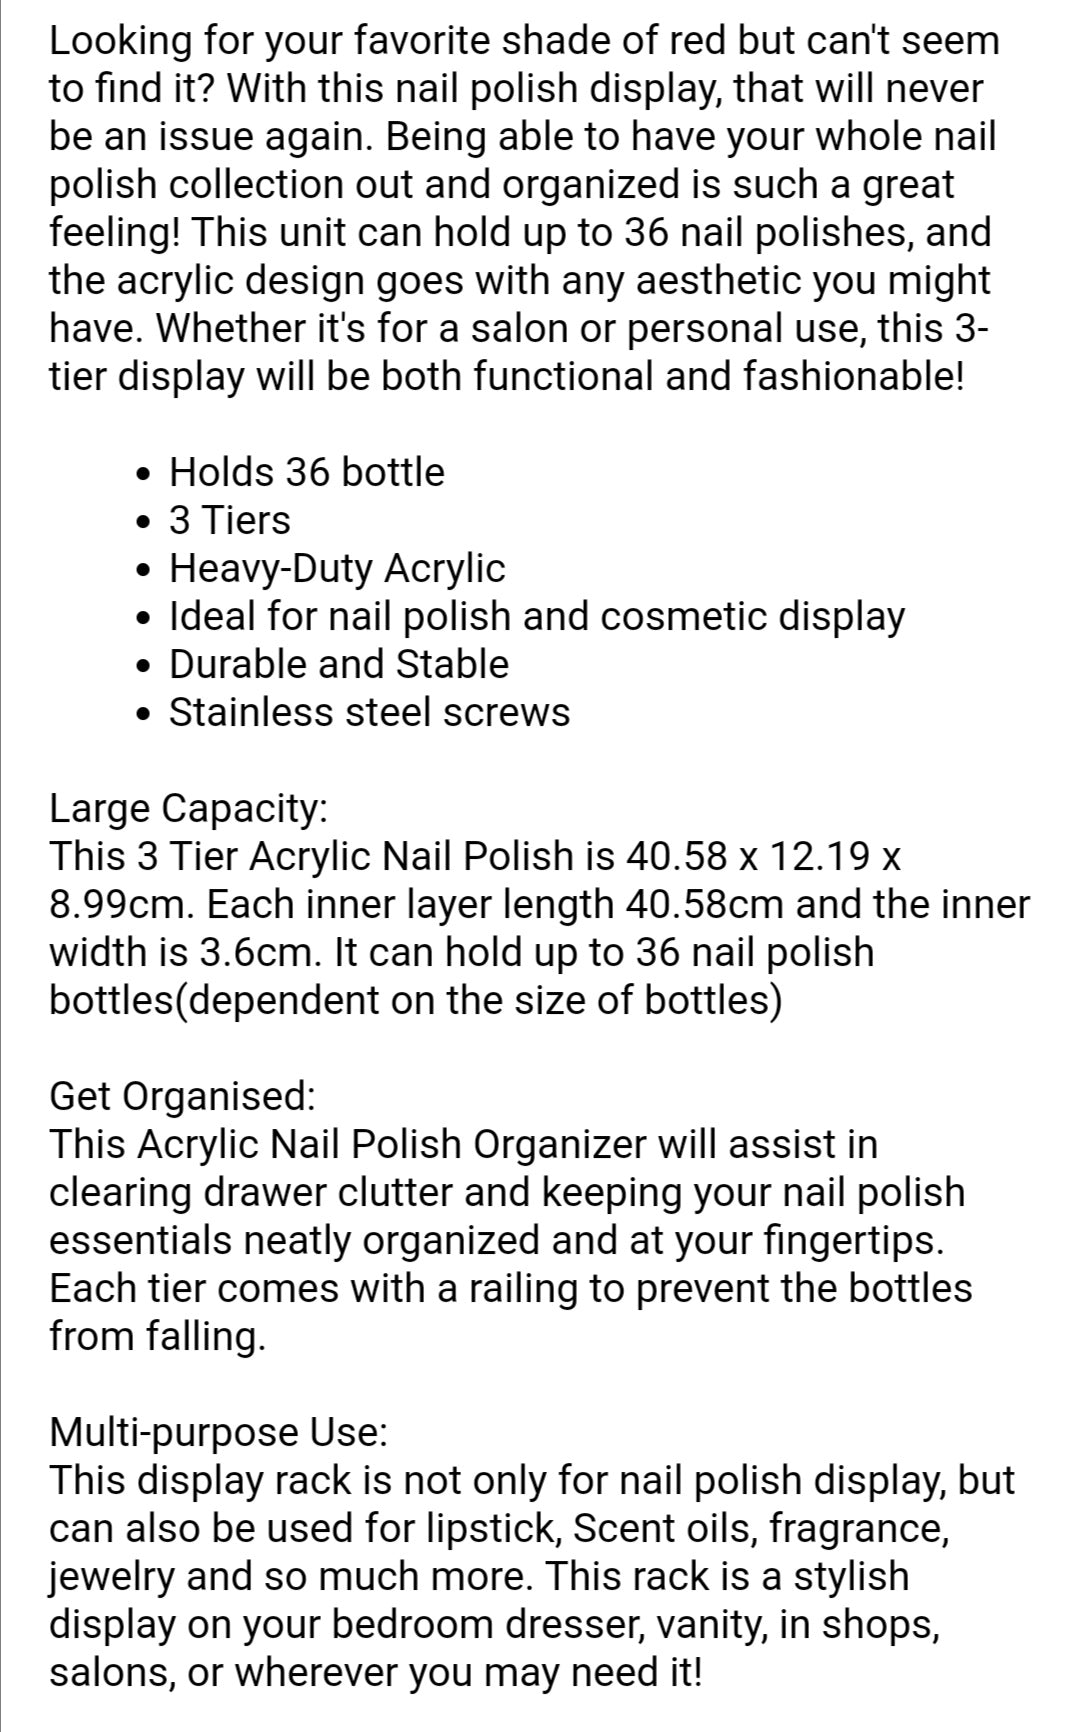 3 Tier Clear Acyrlic Nail Polish Display Rack